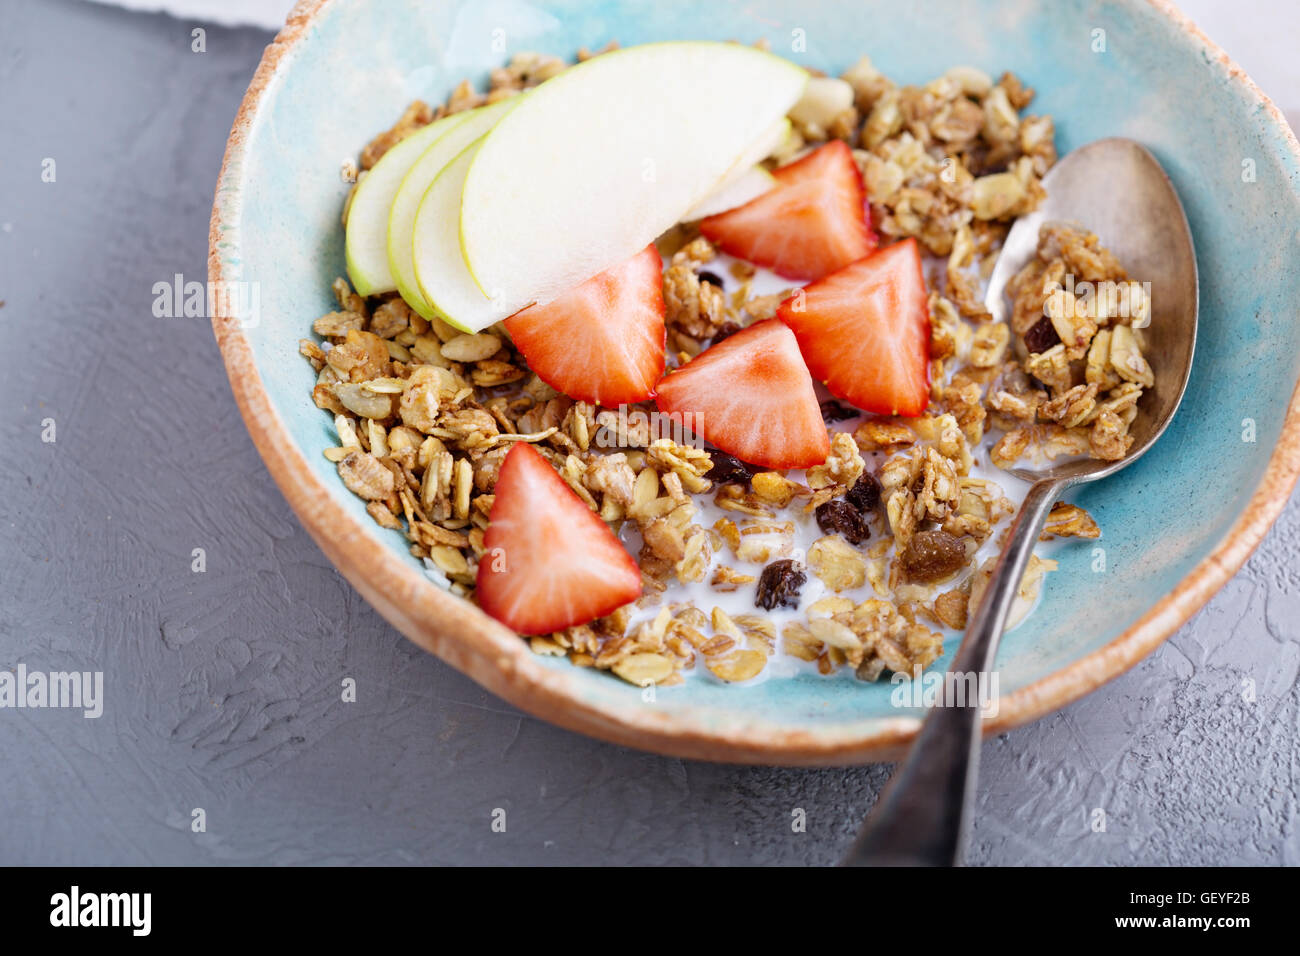 Homemade granola with milk for breakfast Stock Photo